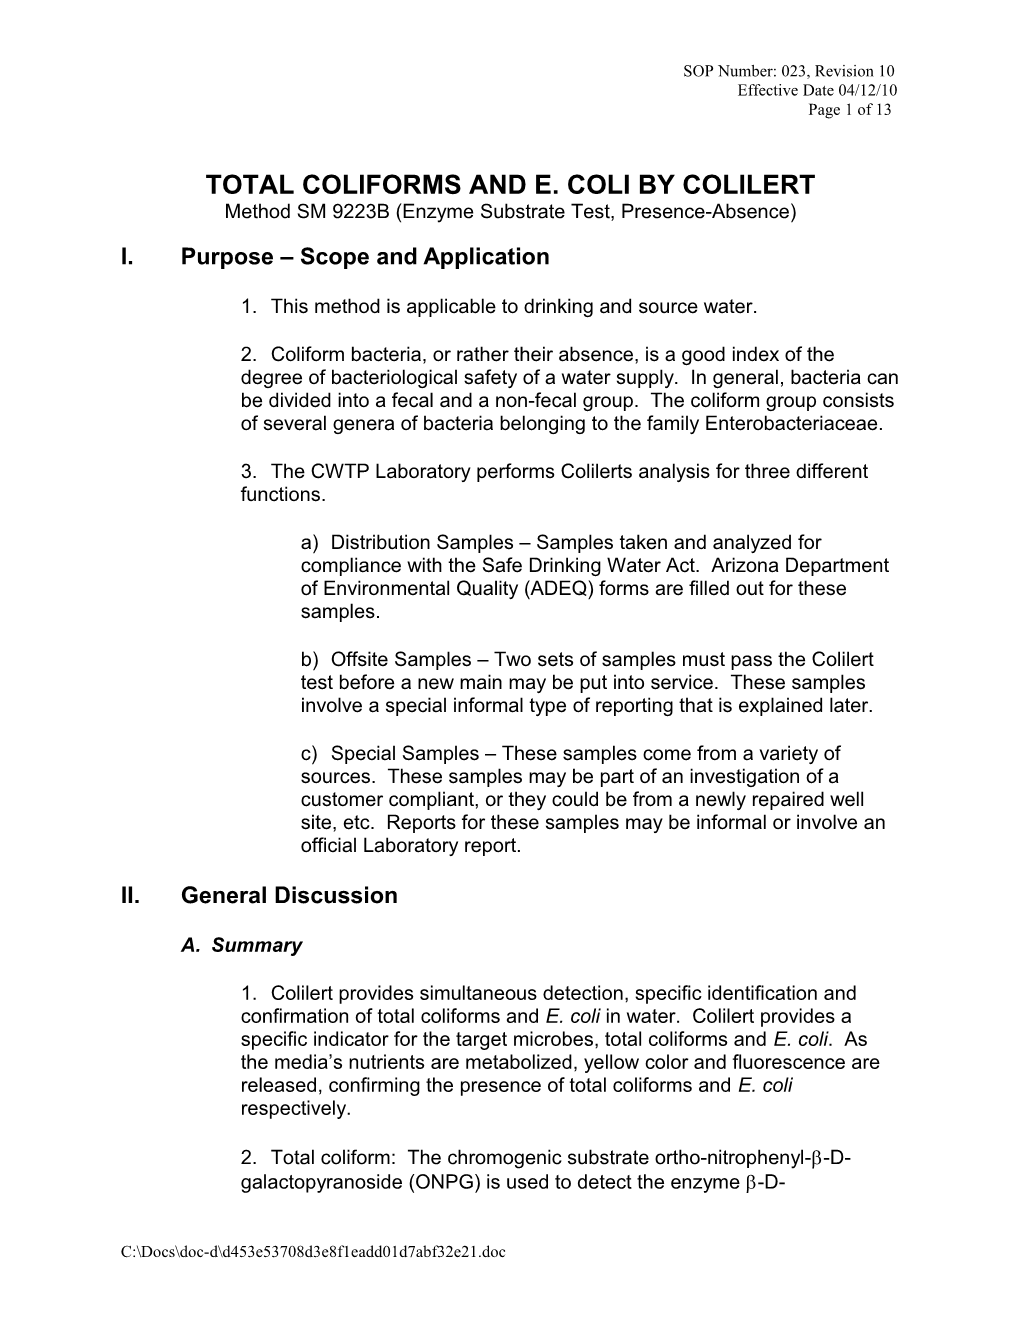 Total Coliforms and E. Coli by Colilert